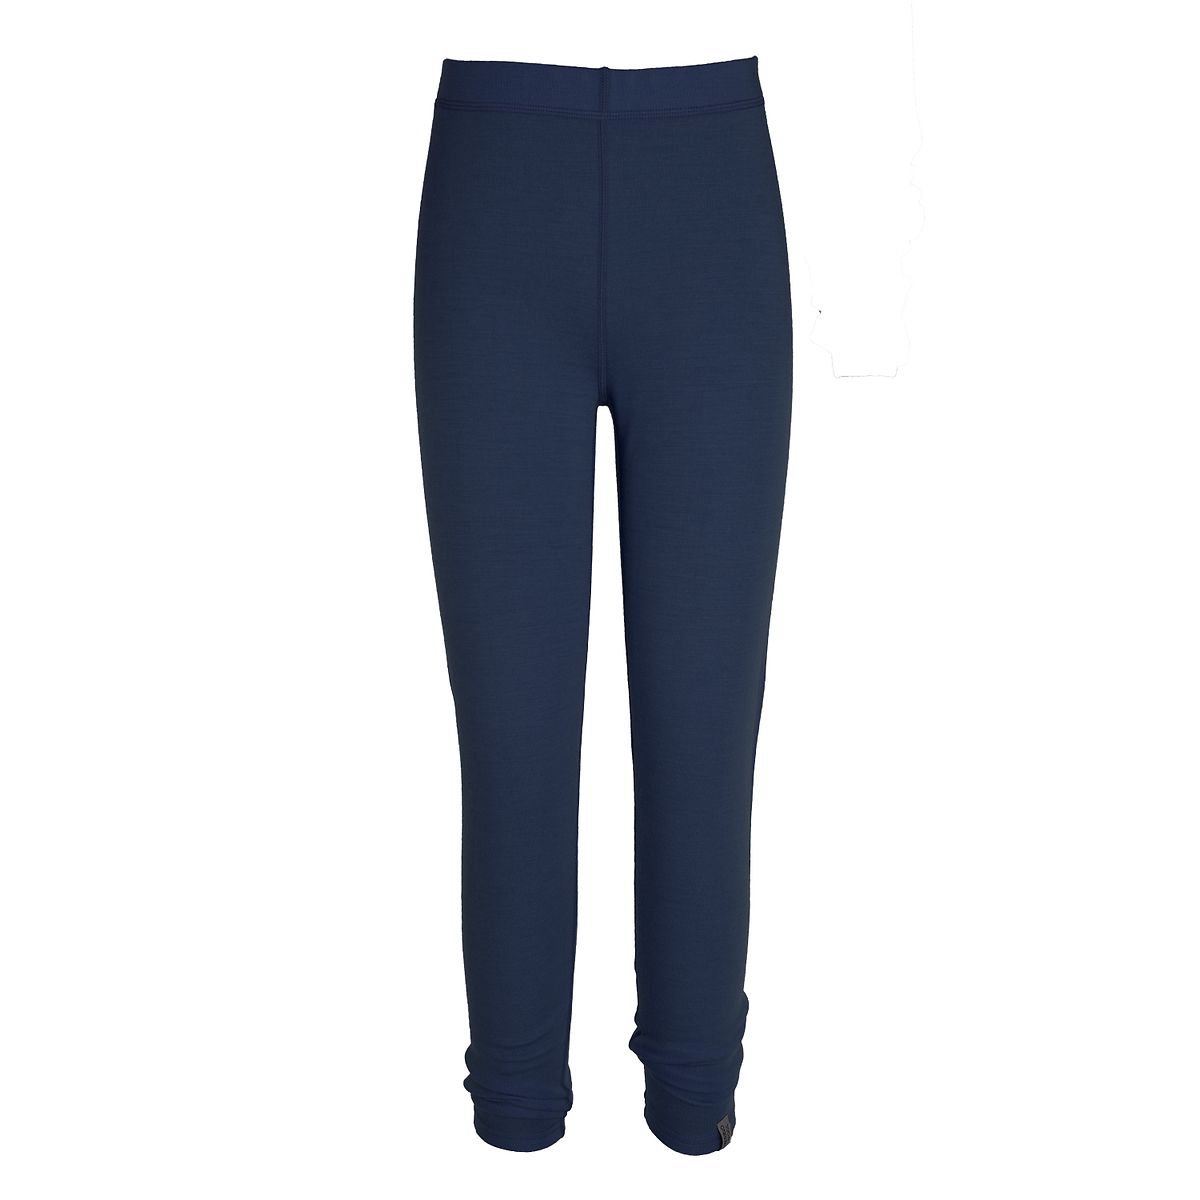 Jonathan merino wool pants, dark blue (110-150 cm)